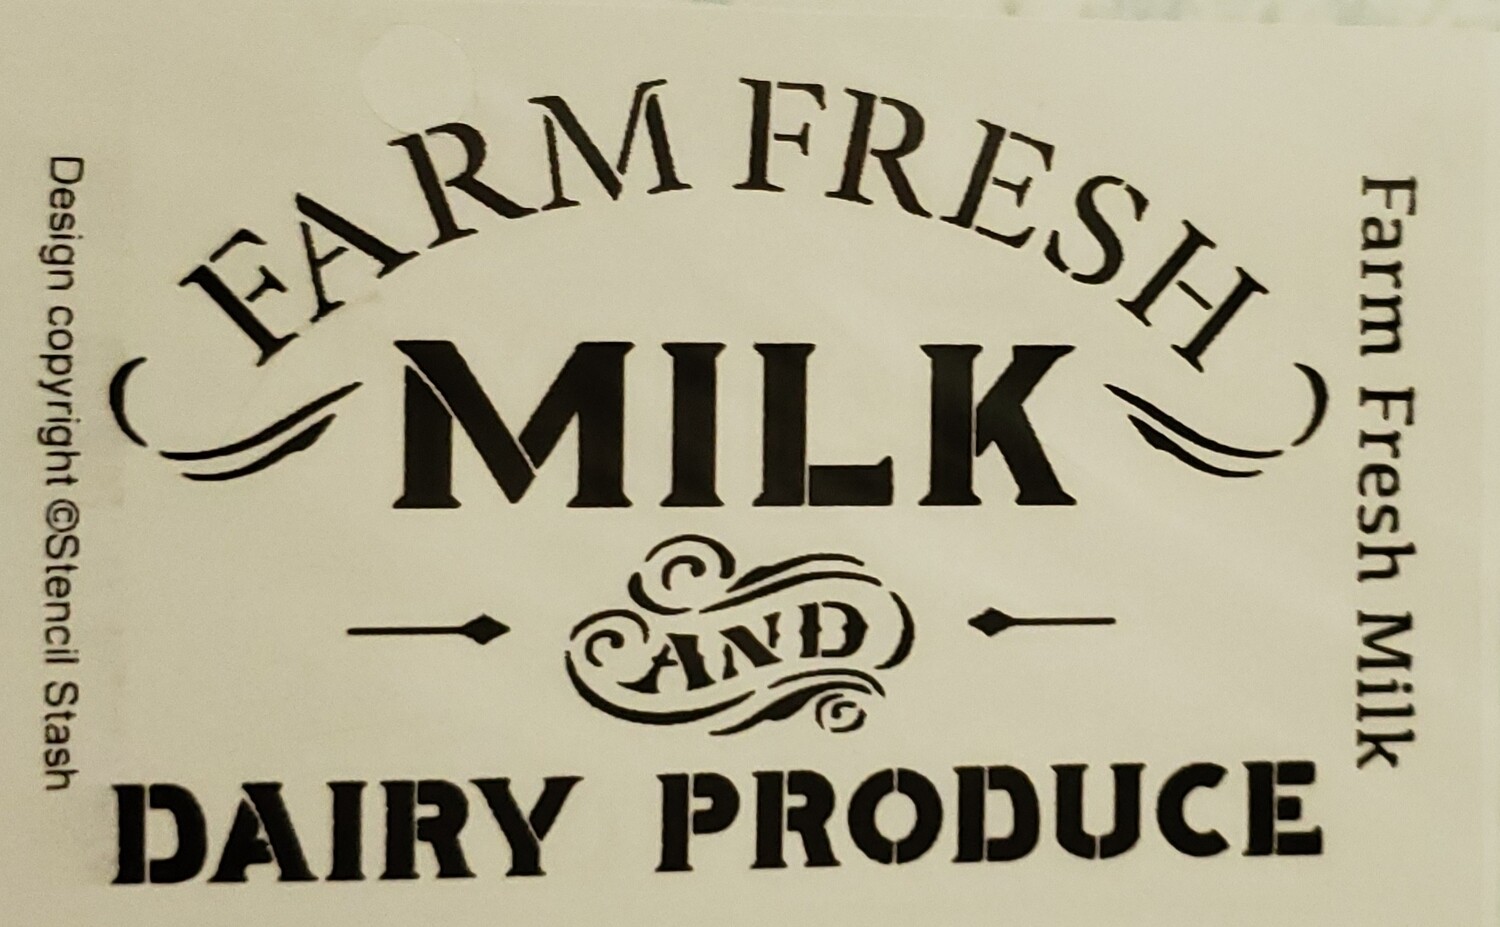 Farm Fresh Milk Stencil